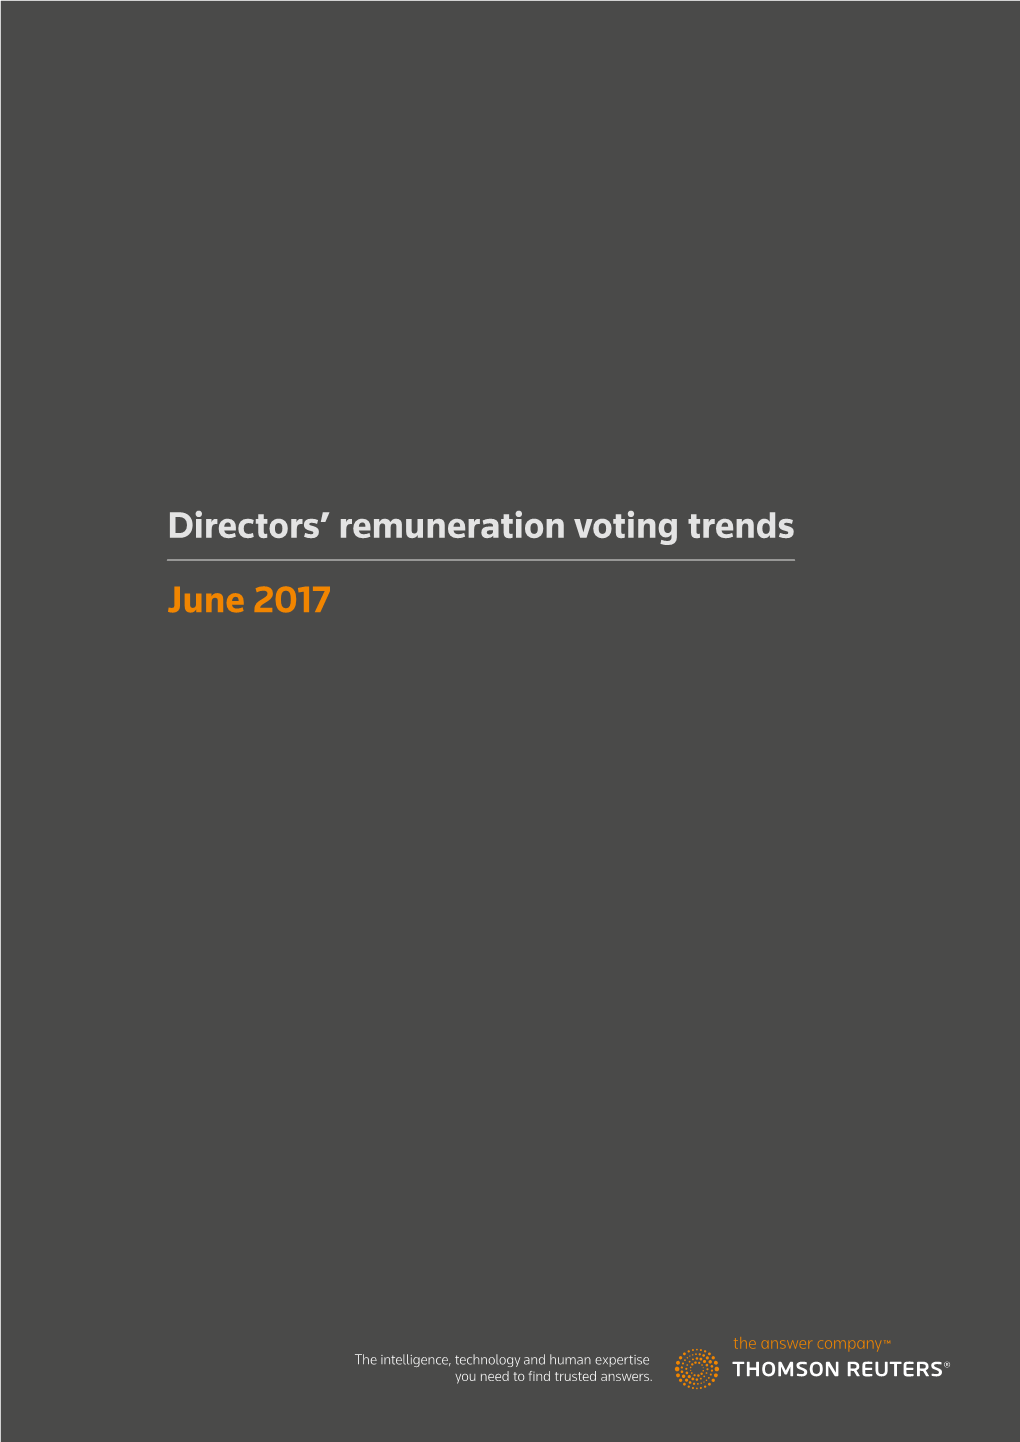 Directors' Remuneration Voting Trends June 2017